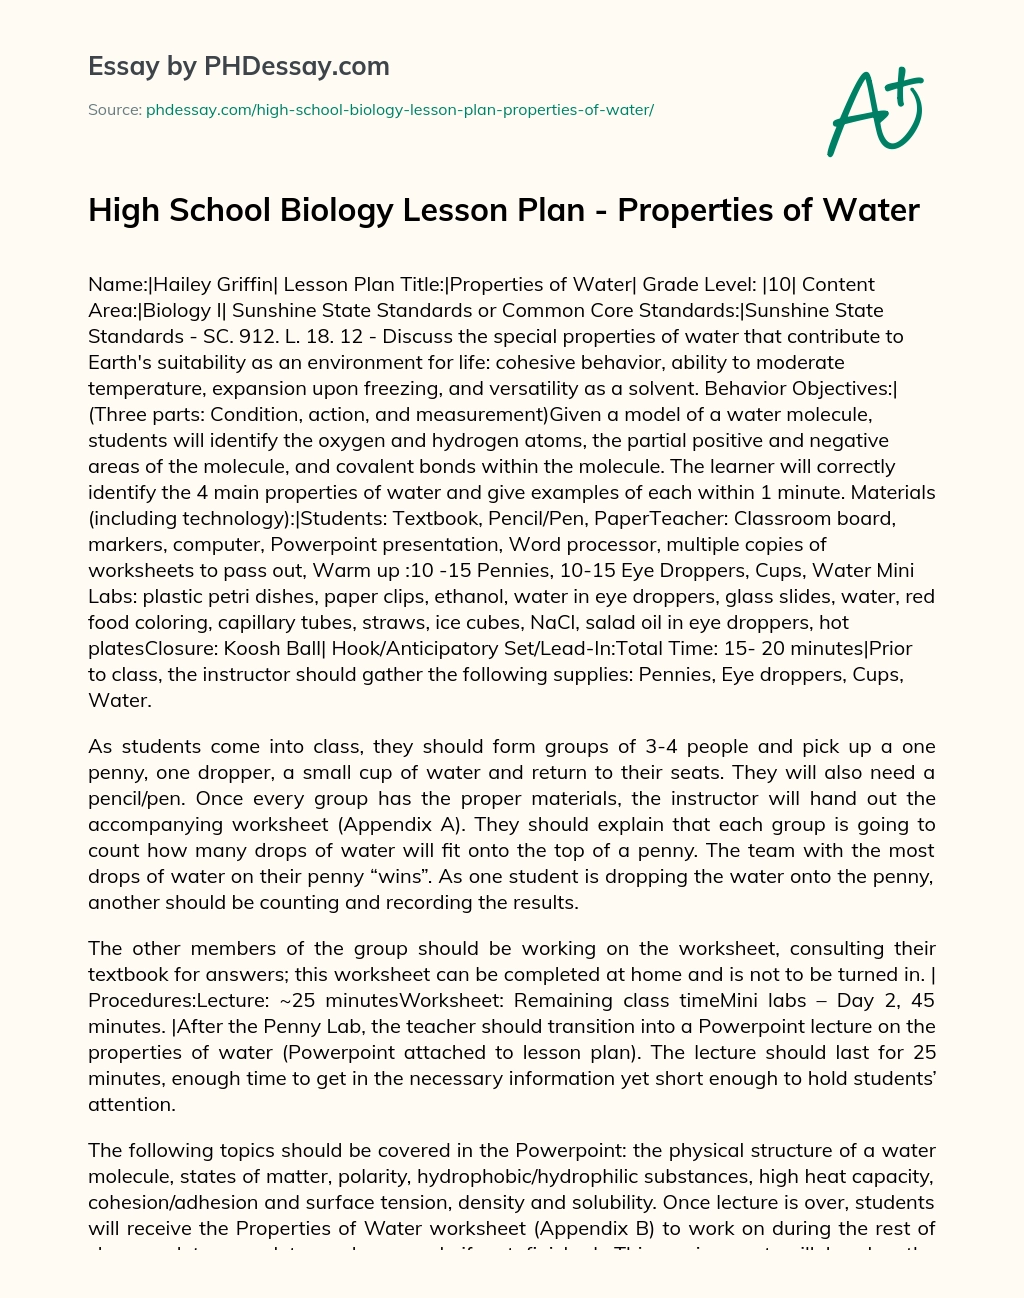 High School Biology Lesson Plan – Properties of Water essay